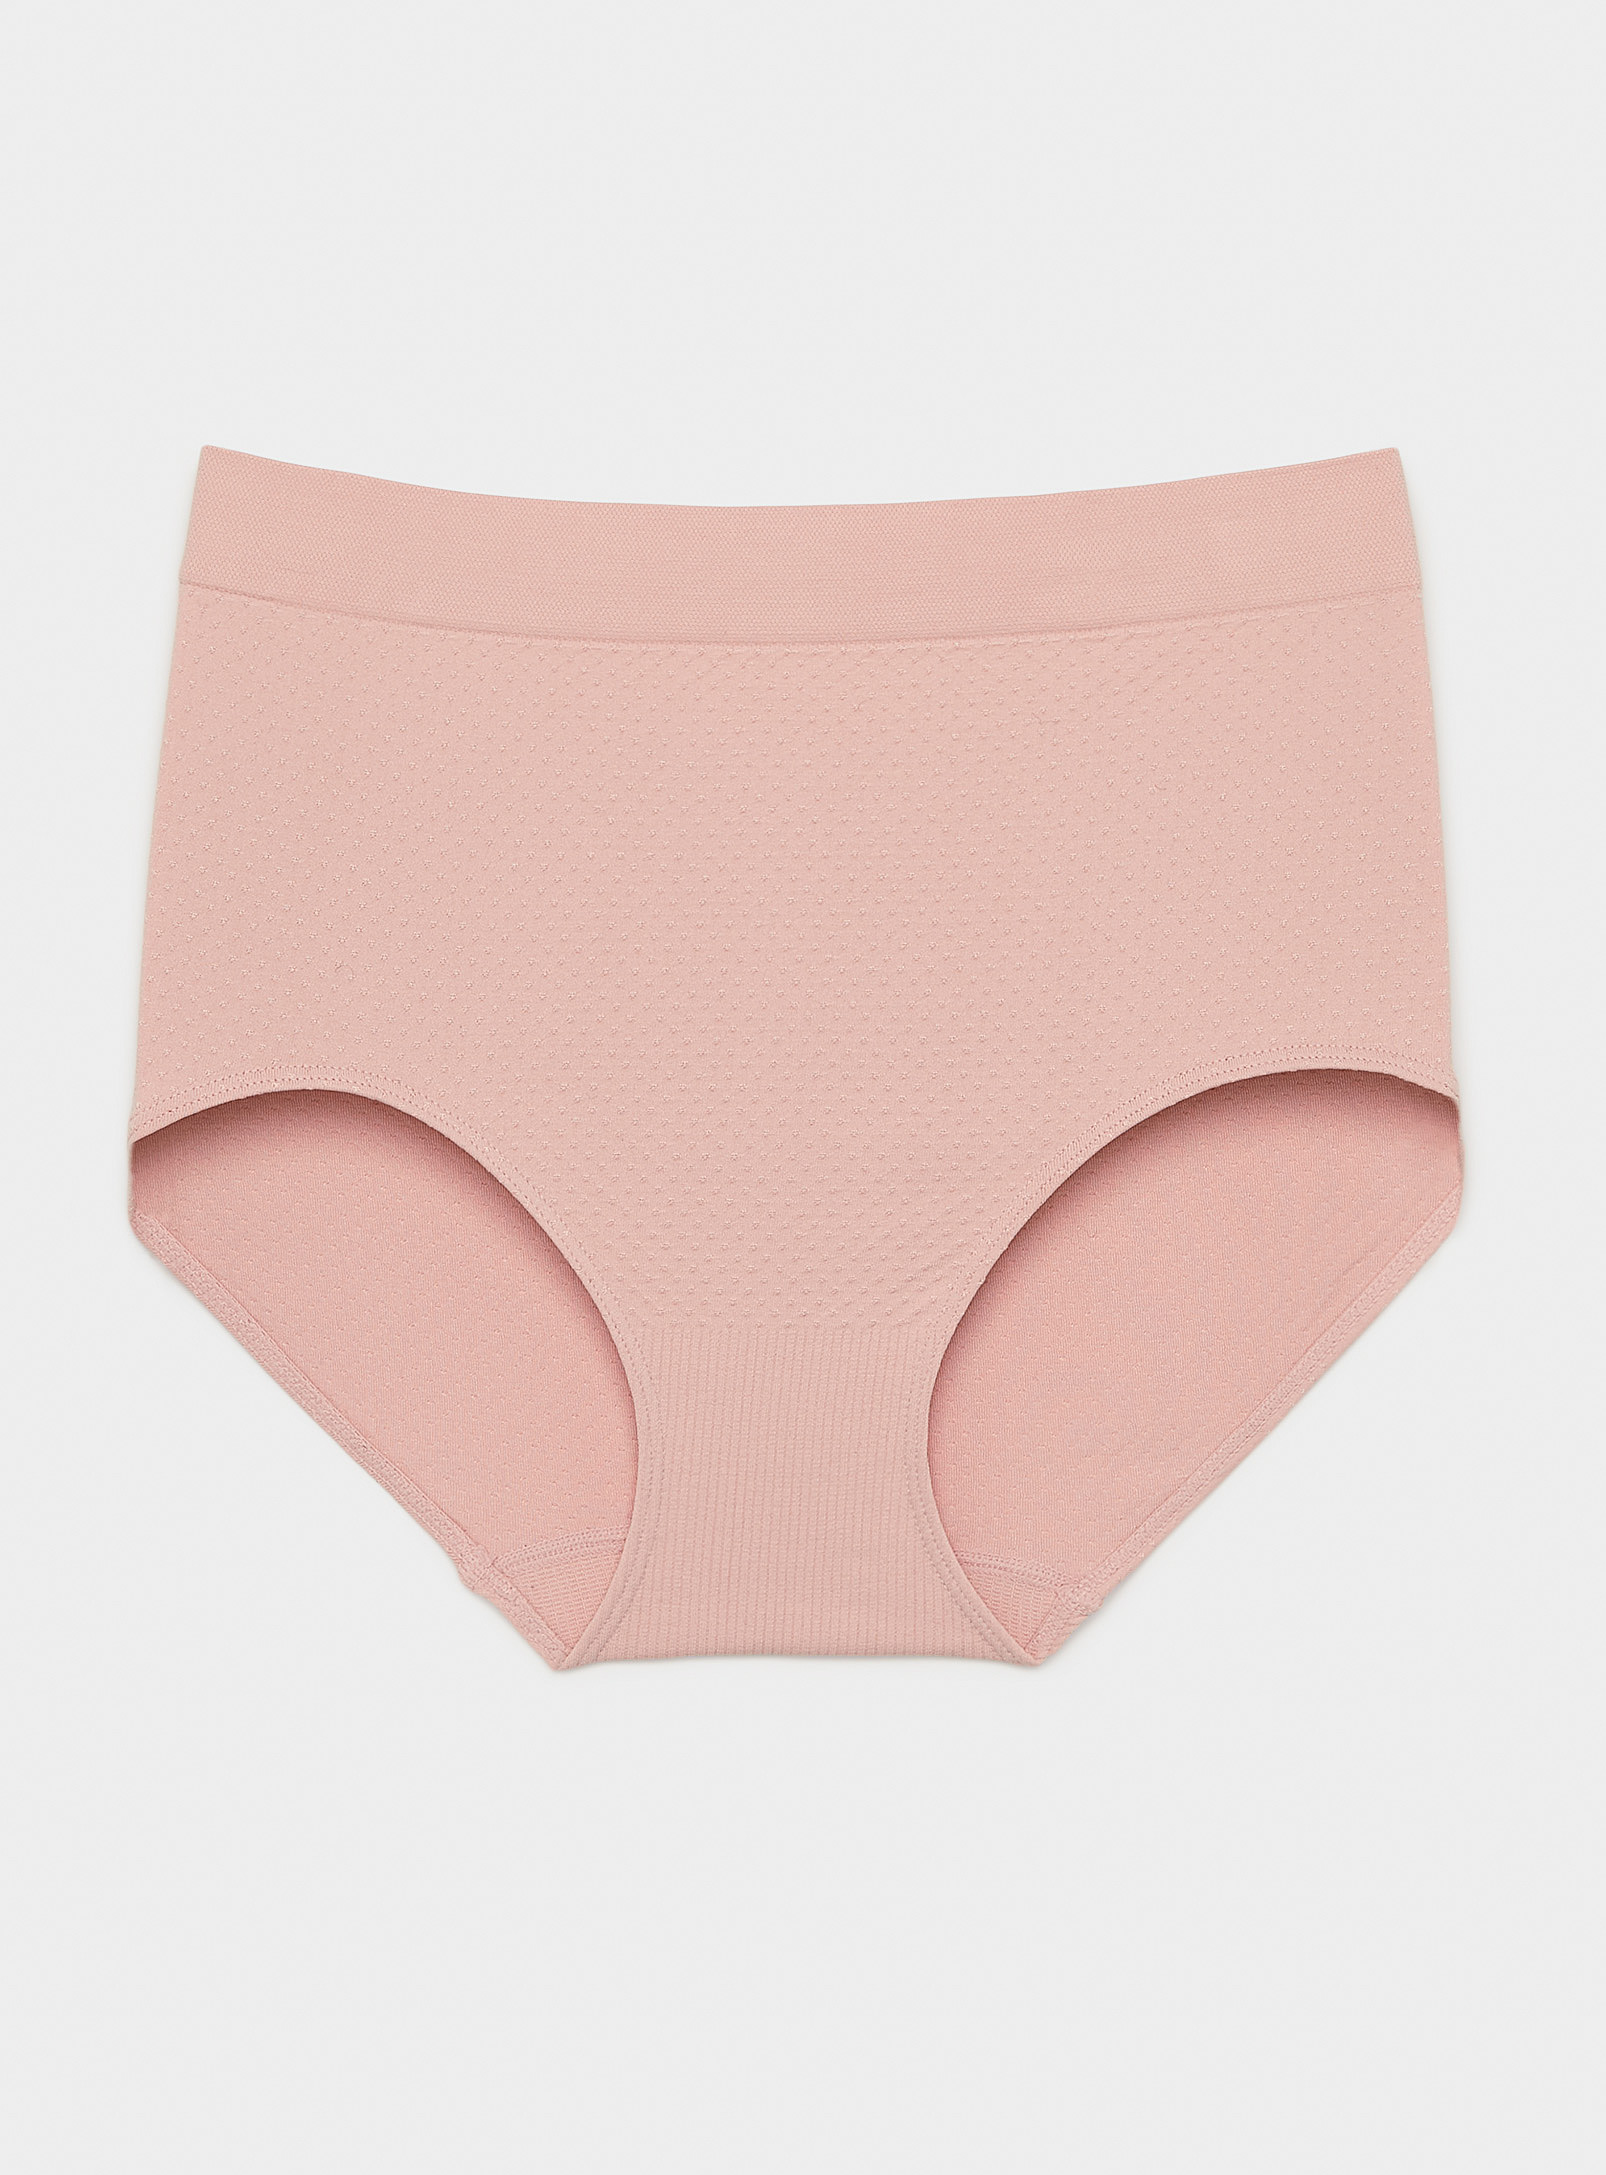 Miiyu Textured High-rise Panty In Medium Pink